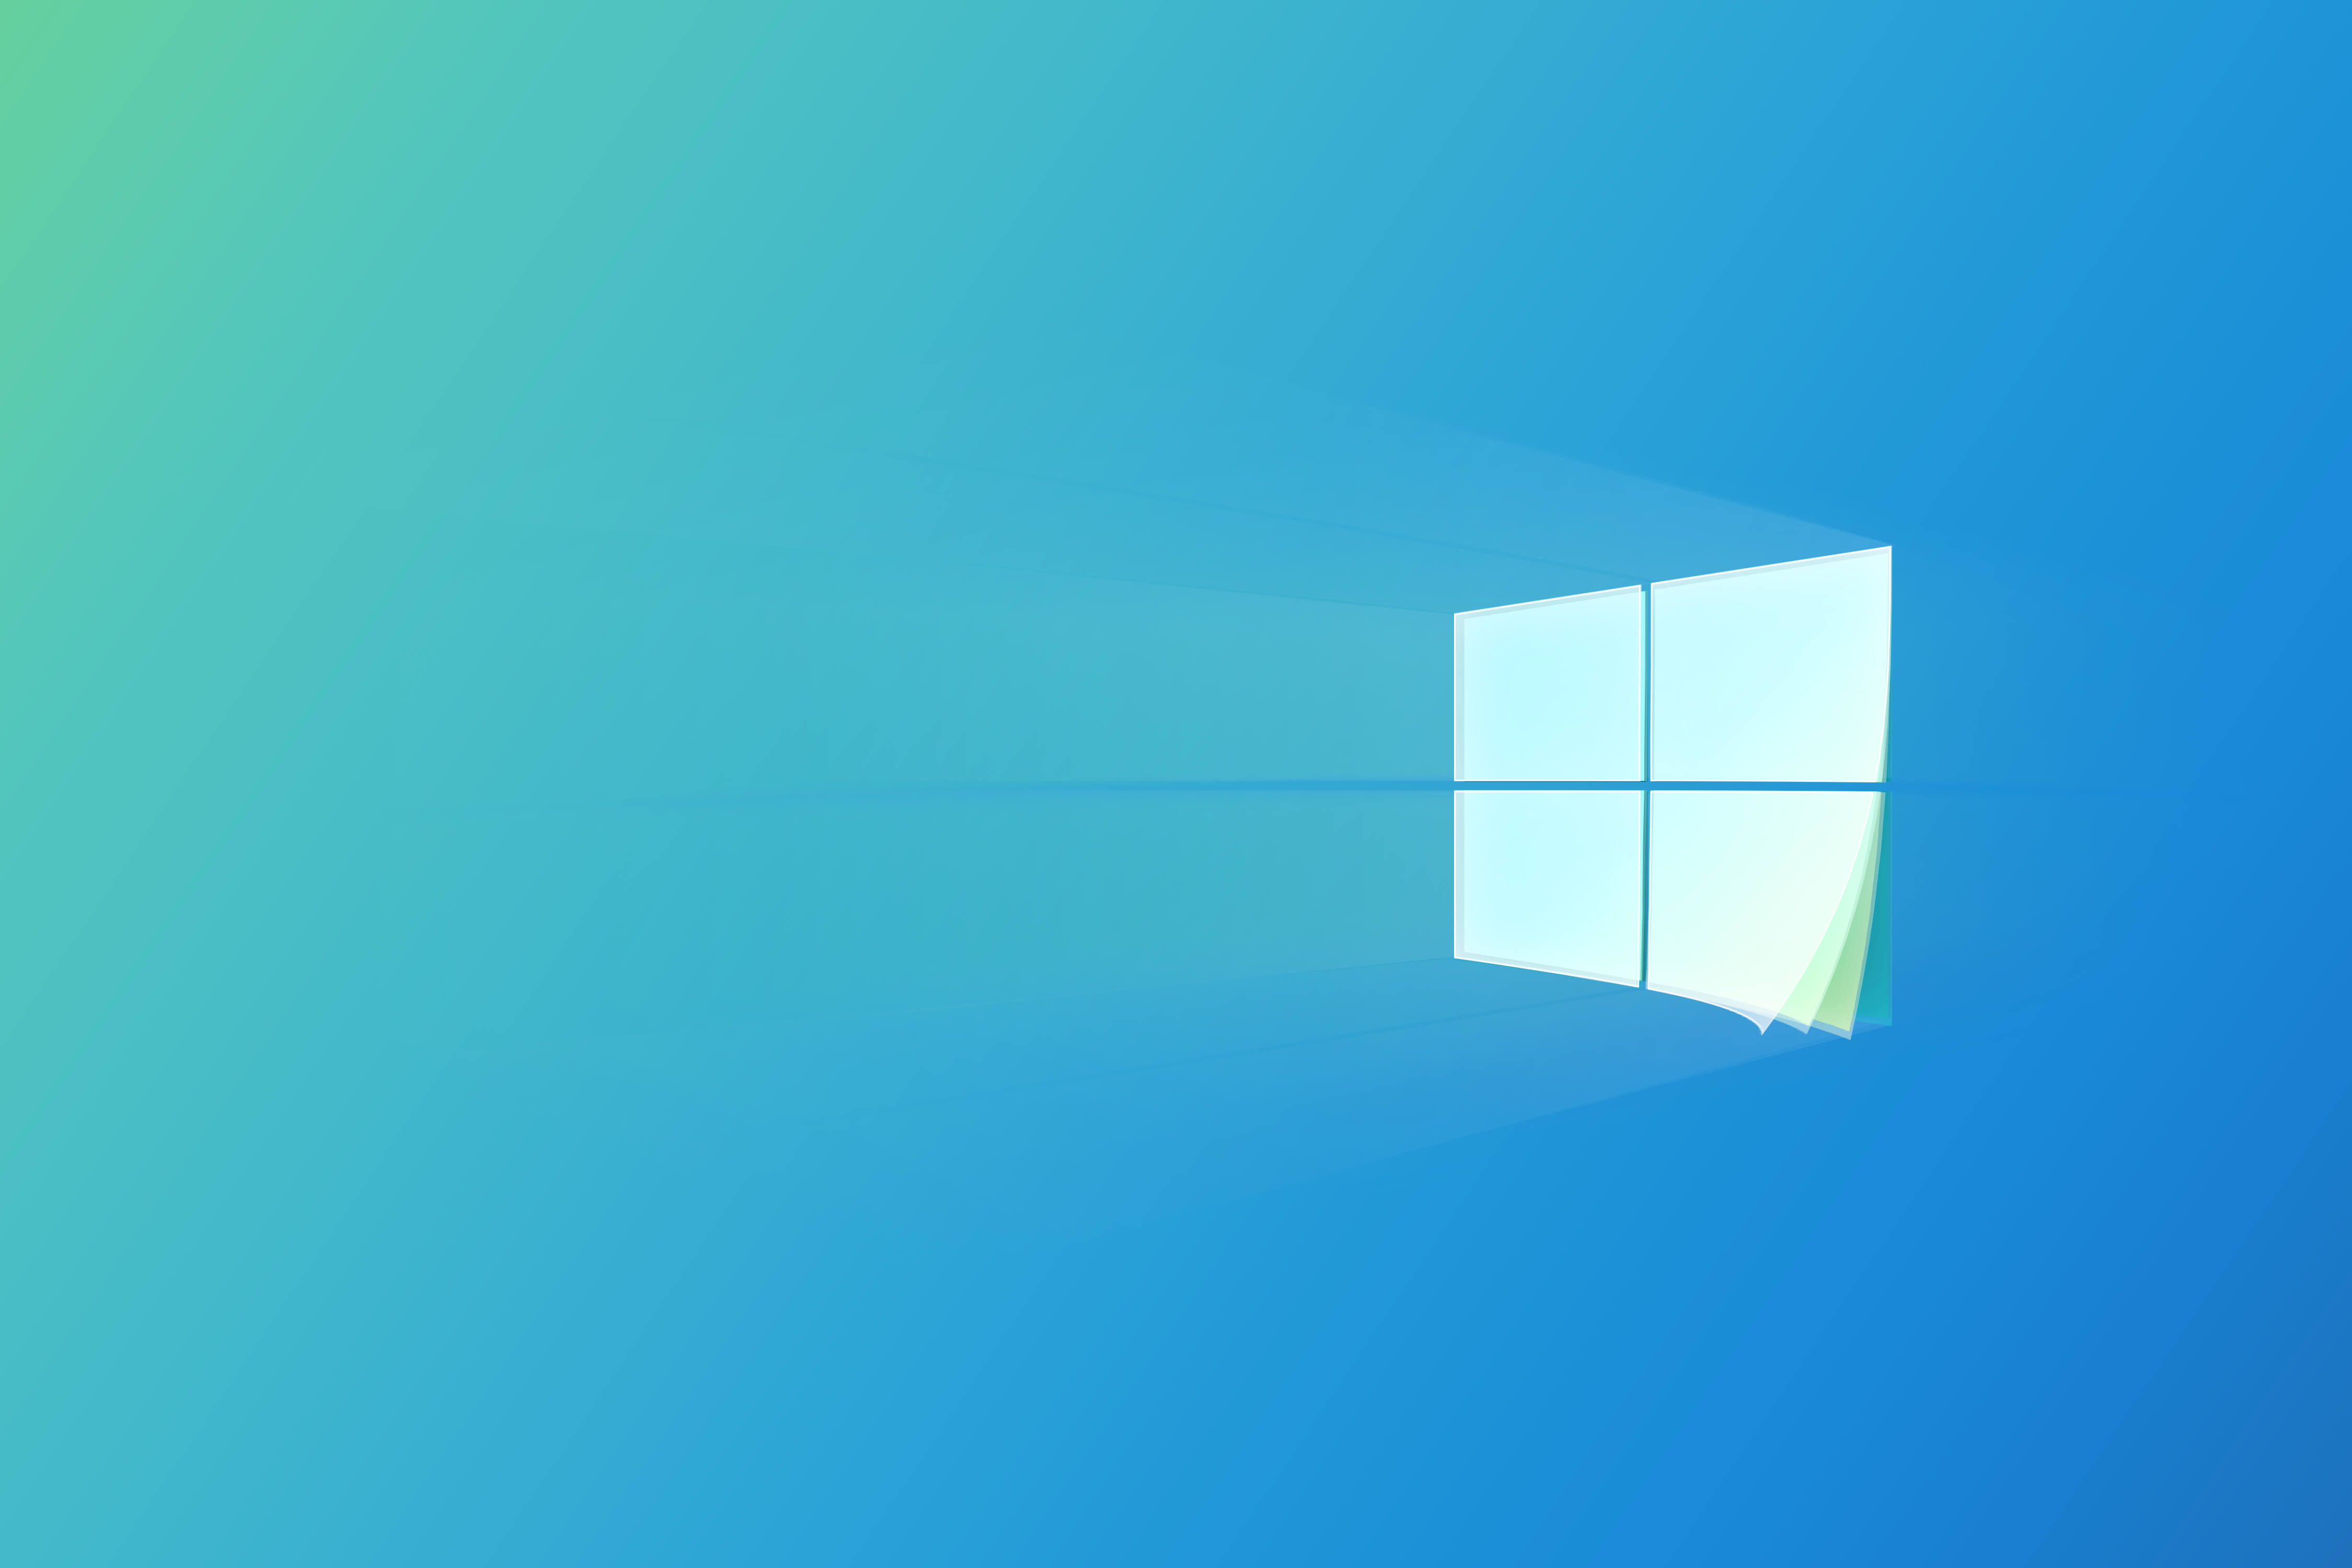 Windows 10 Hero Logo Wallpapers